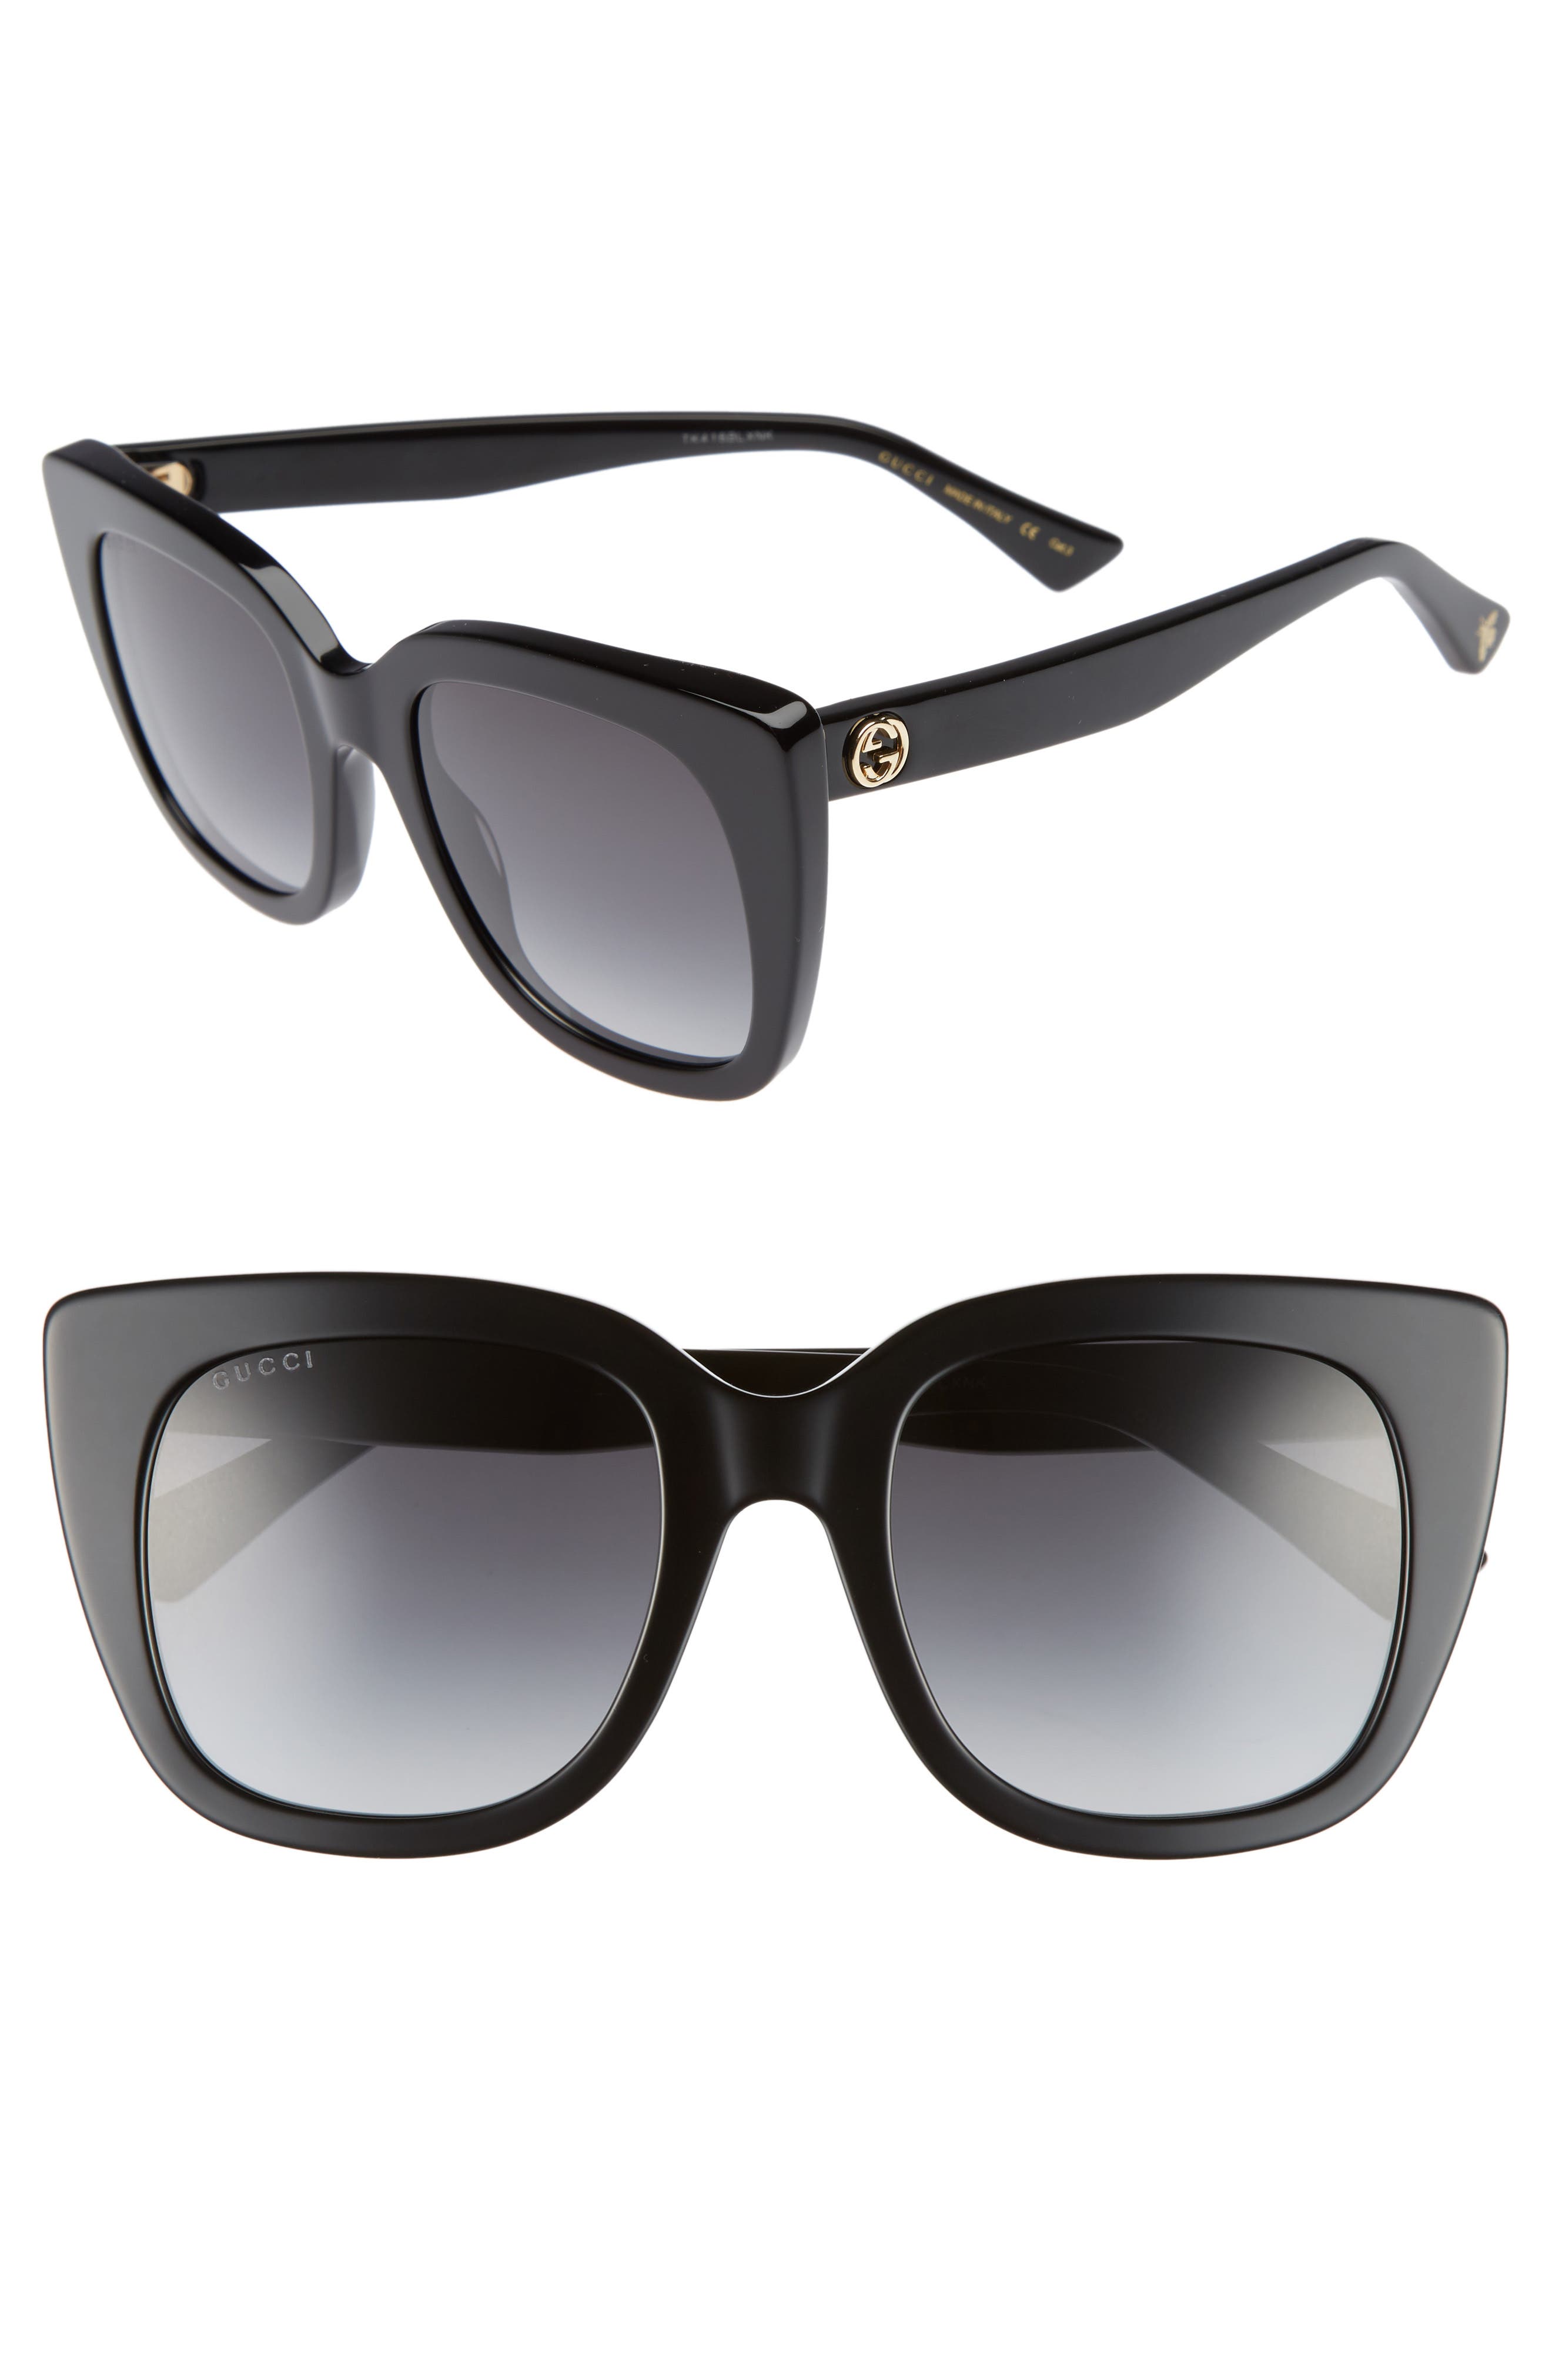 Gucci 51mm Cat Eye Sunglasses | Nordstrom